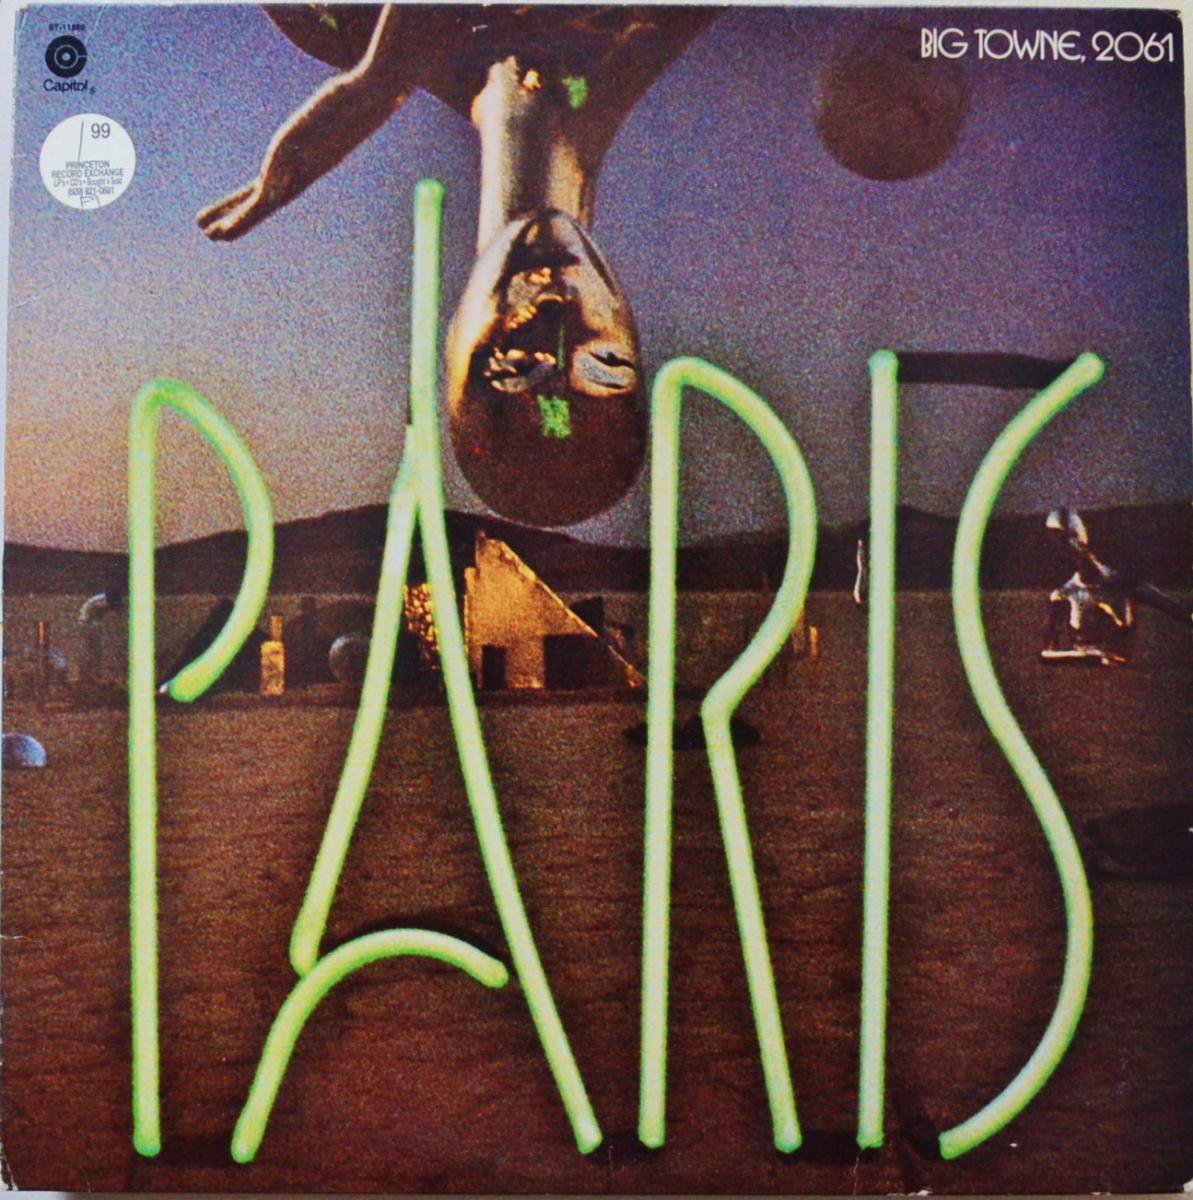 PARIS / BIG TOWNE,2061 (LP)